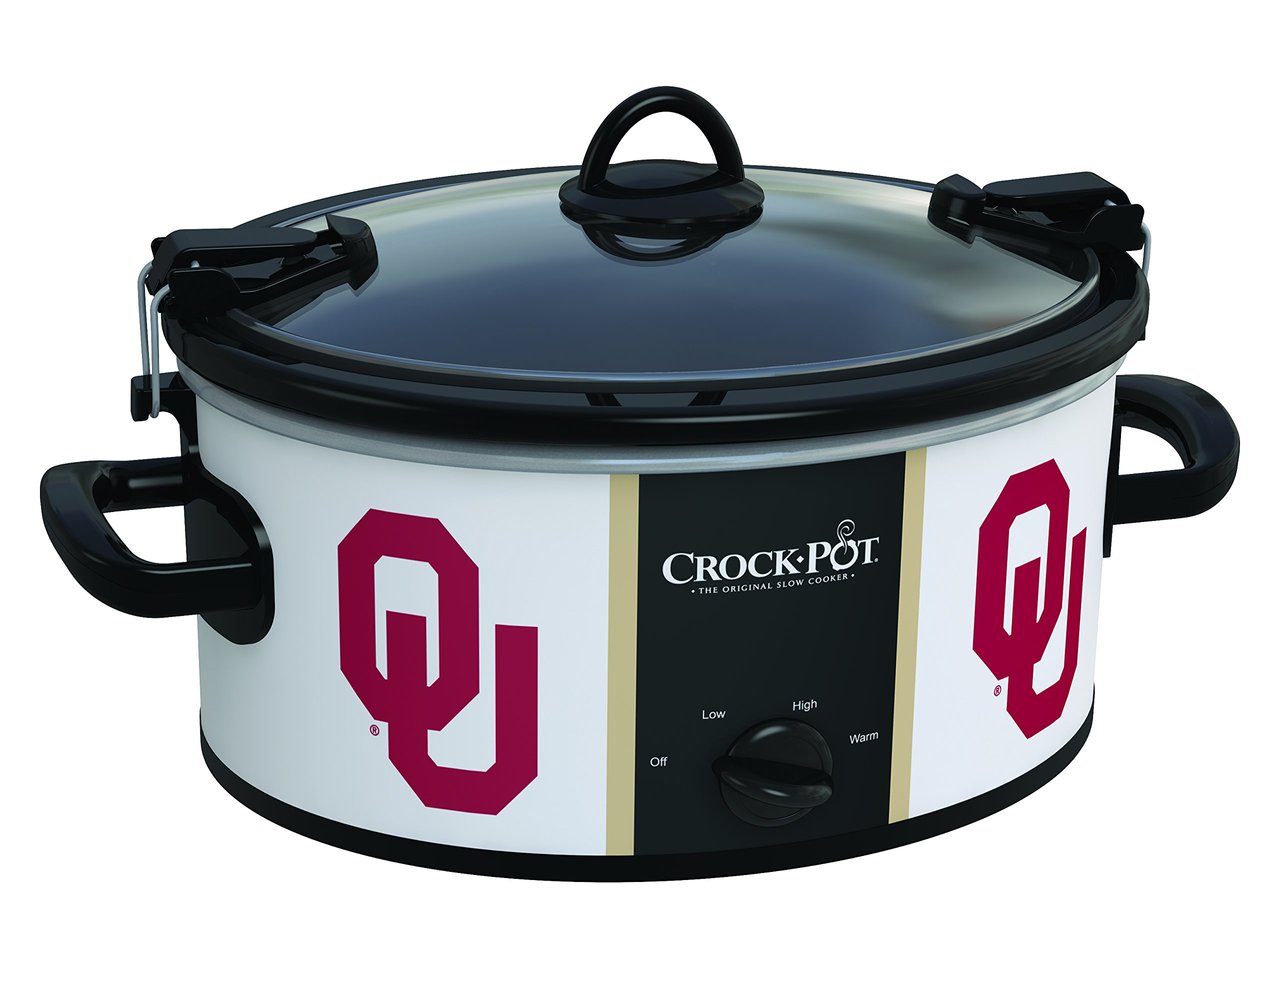 3 Crock-Pot 6 Quart University of Oklahoma Slow Cooker